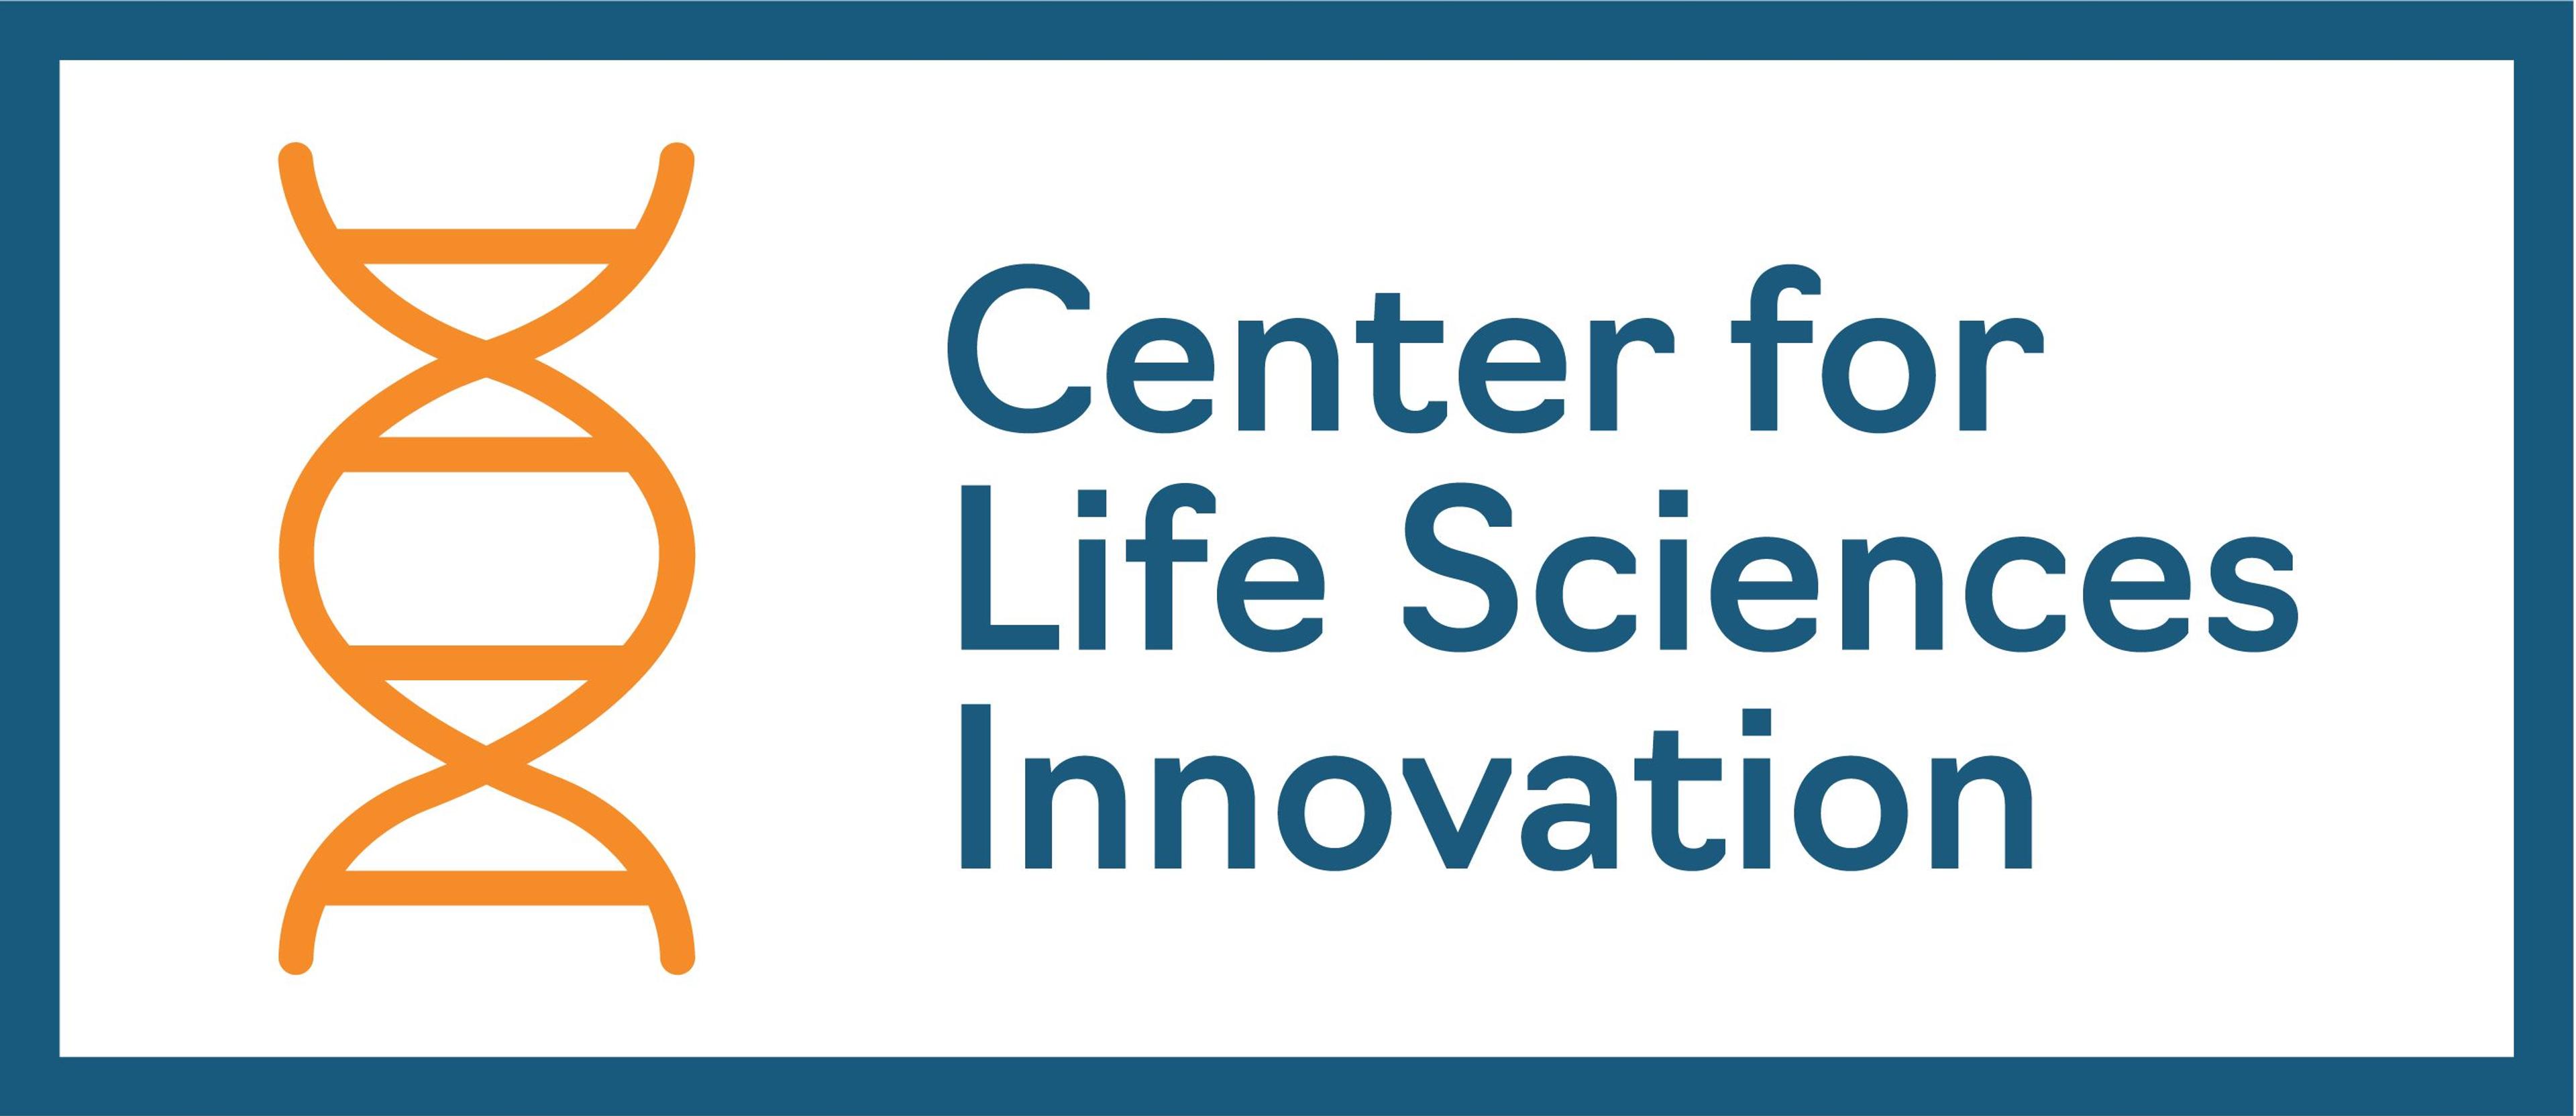 Center for Life Sciences Innovation